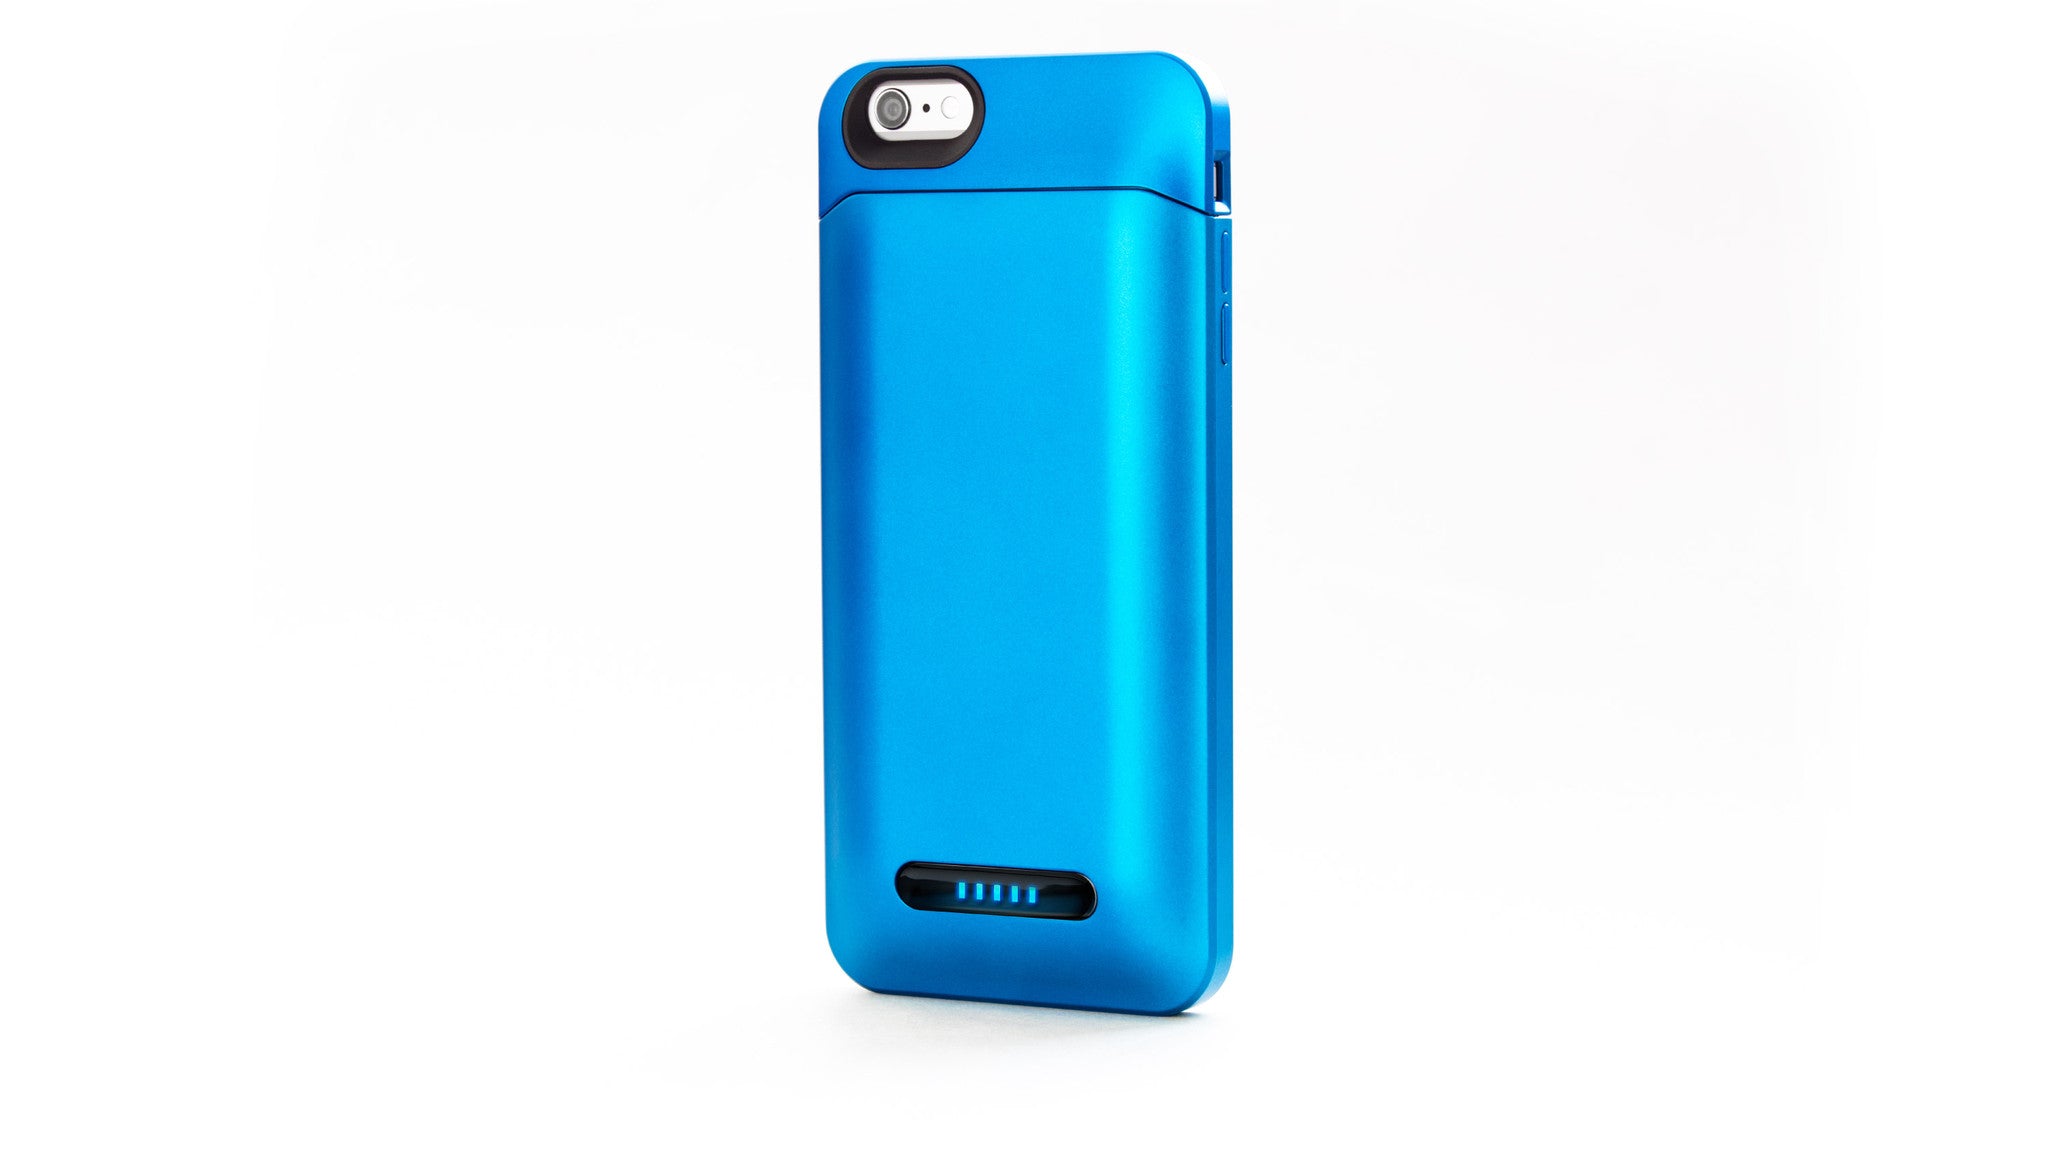 PhoneSuit Elite 6 Battery Case is very durable